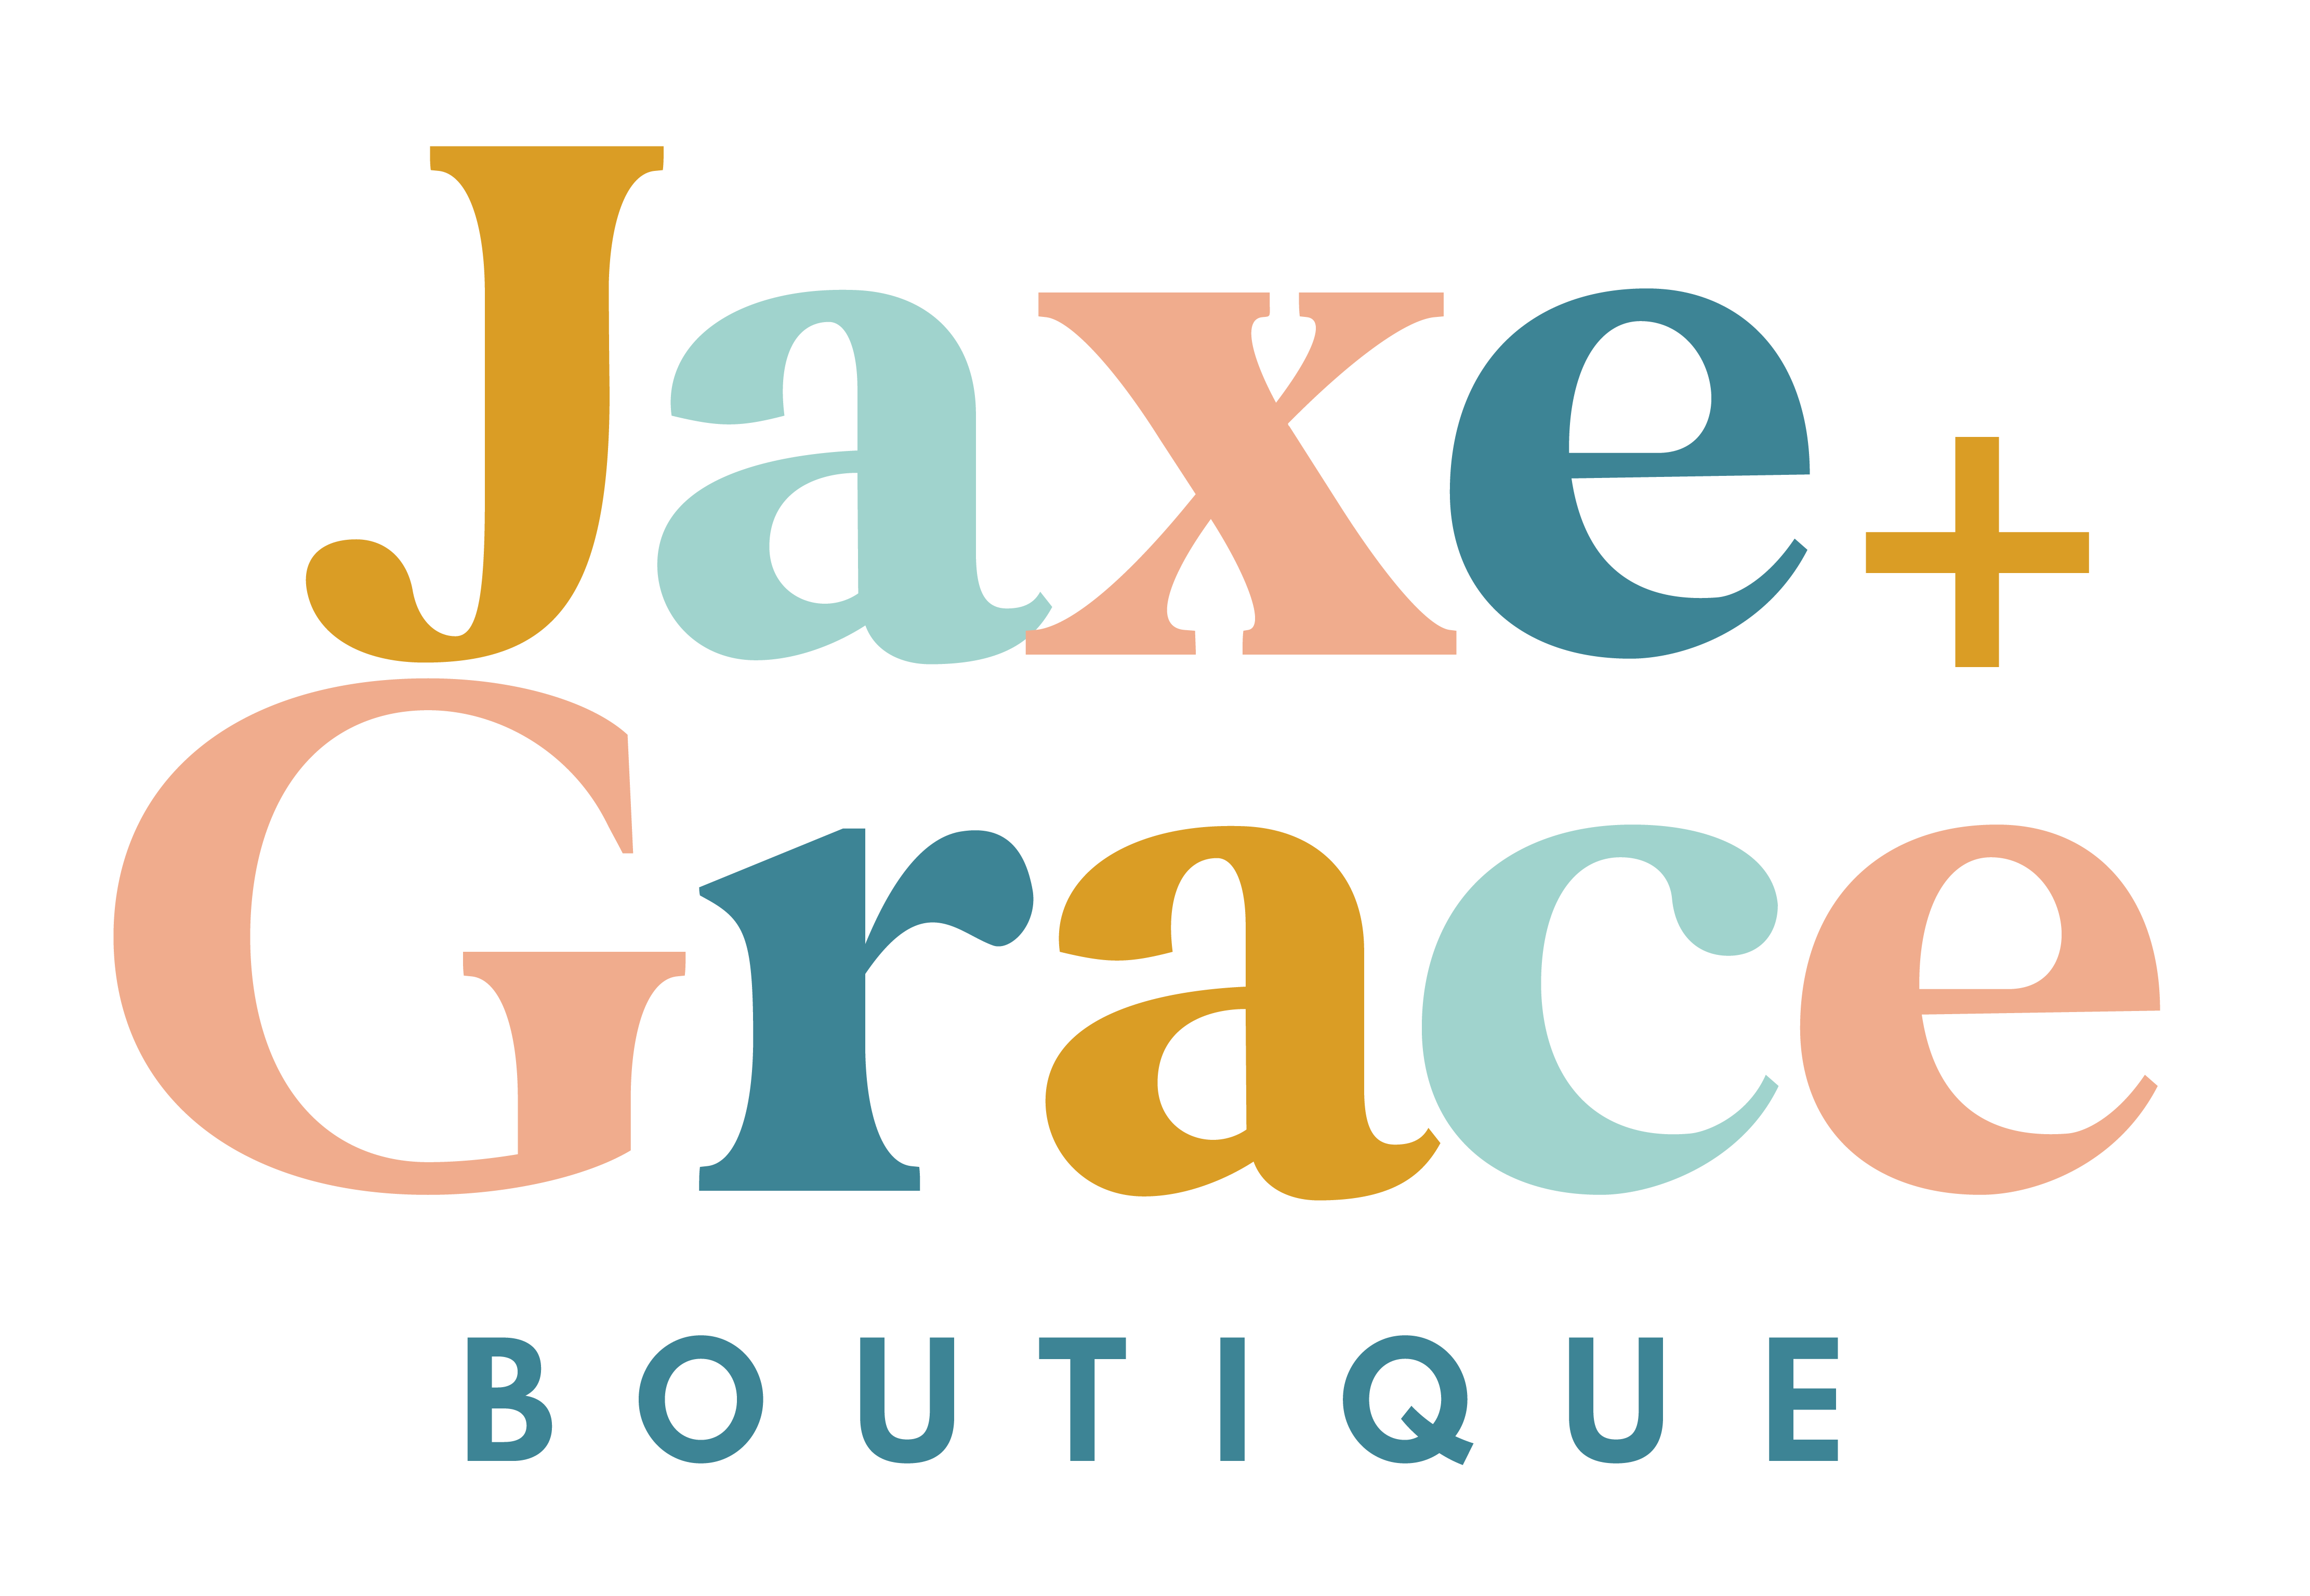 Brumate Hopsulator, DUO, VARIOUS COLORS – Jaxe + Grace Boutique